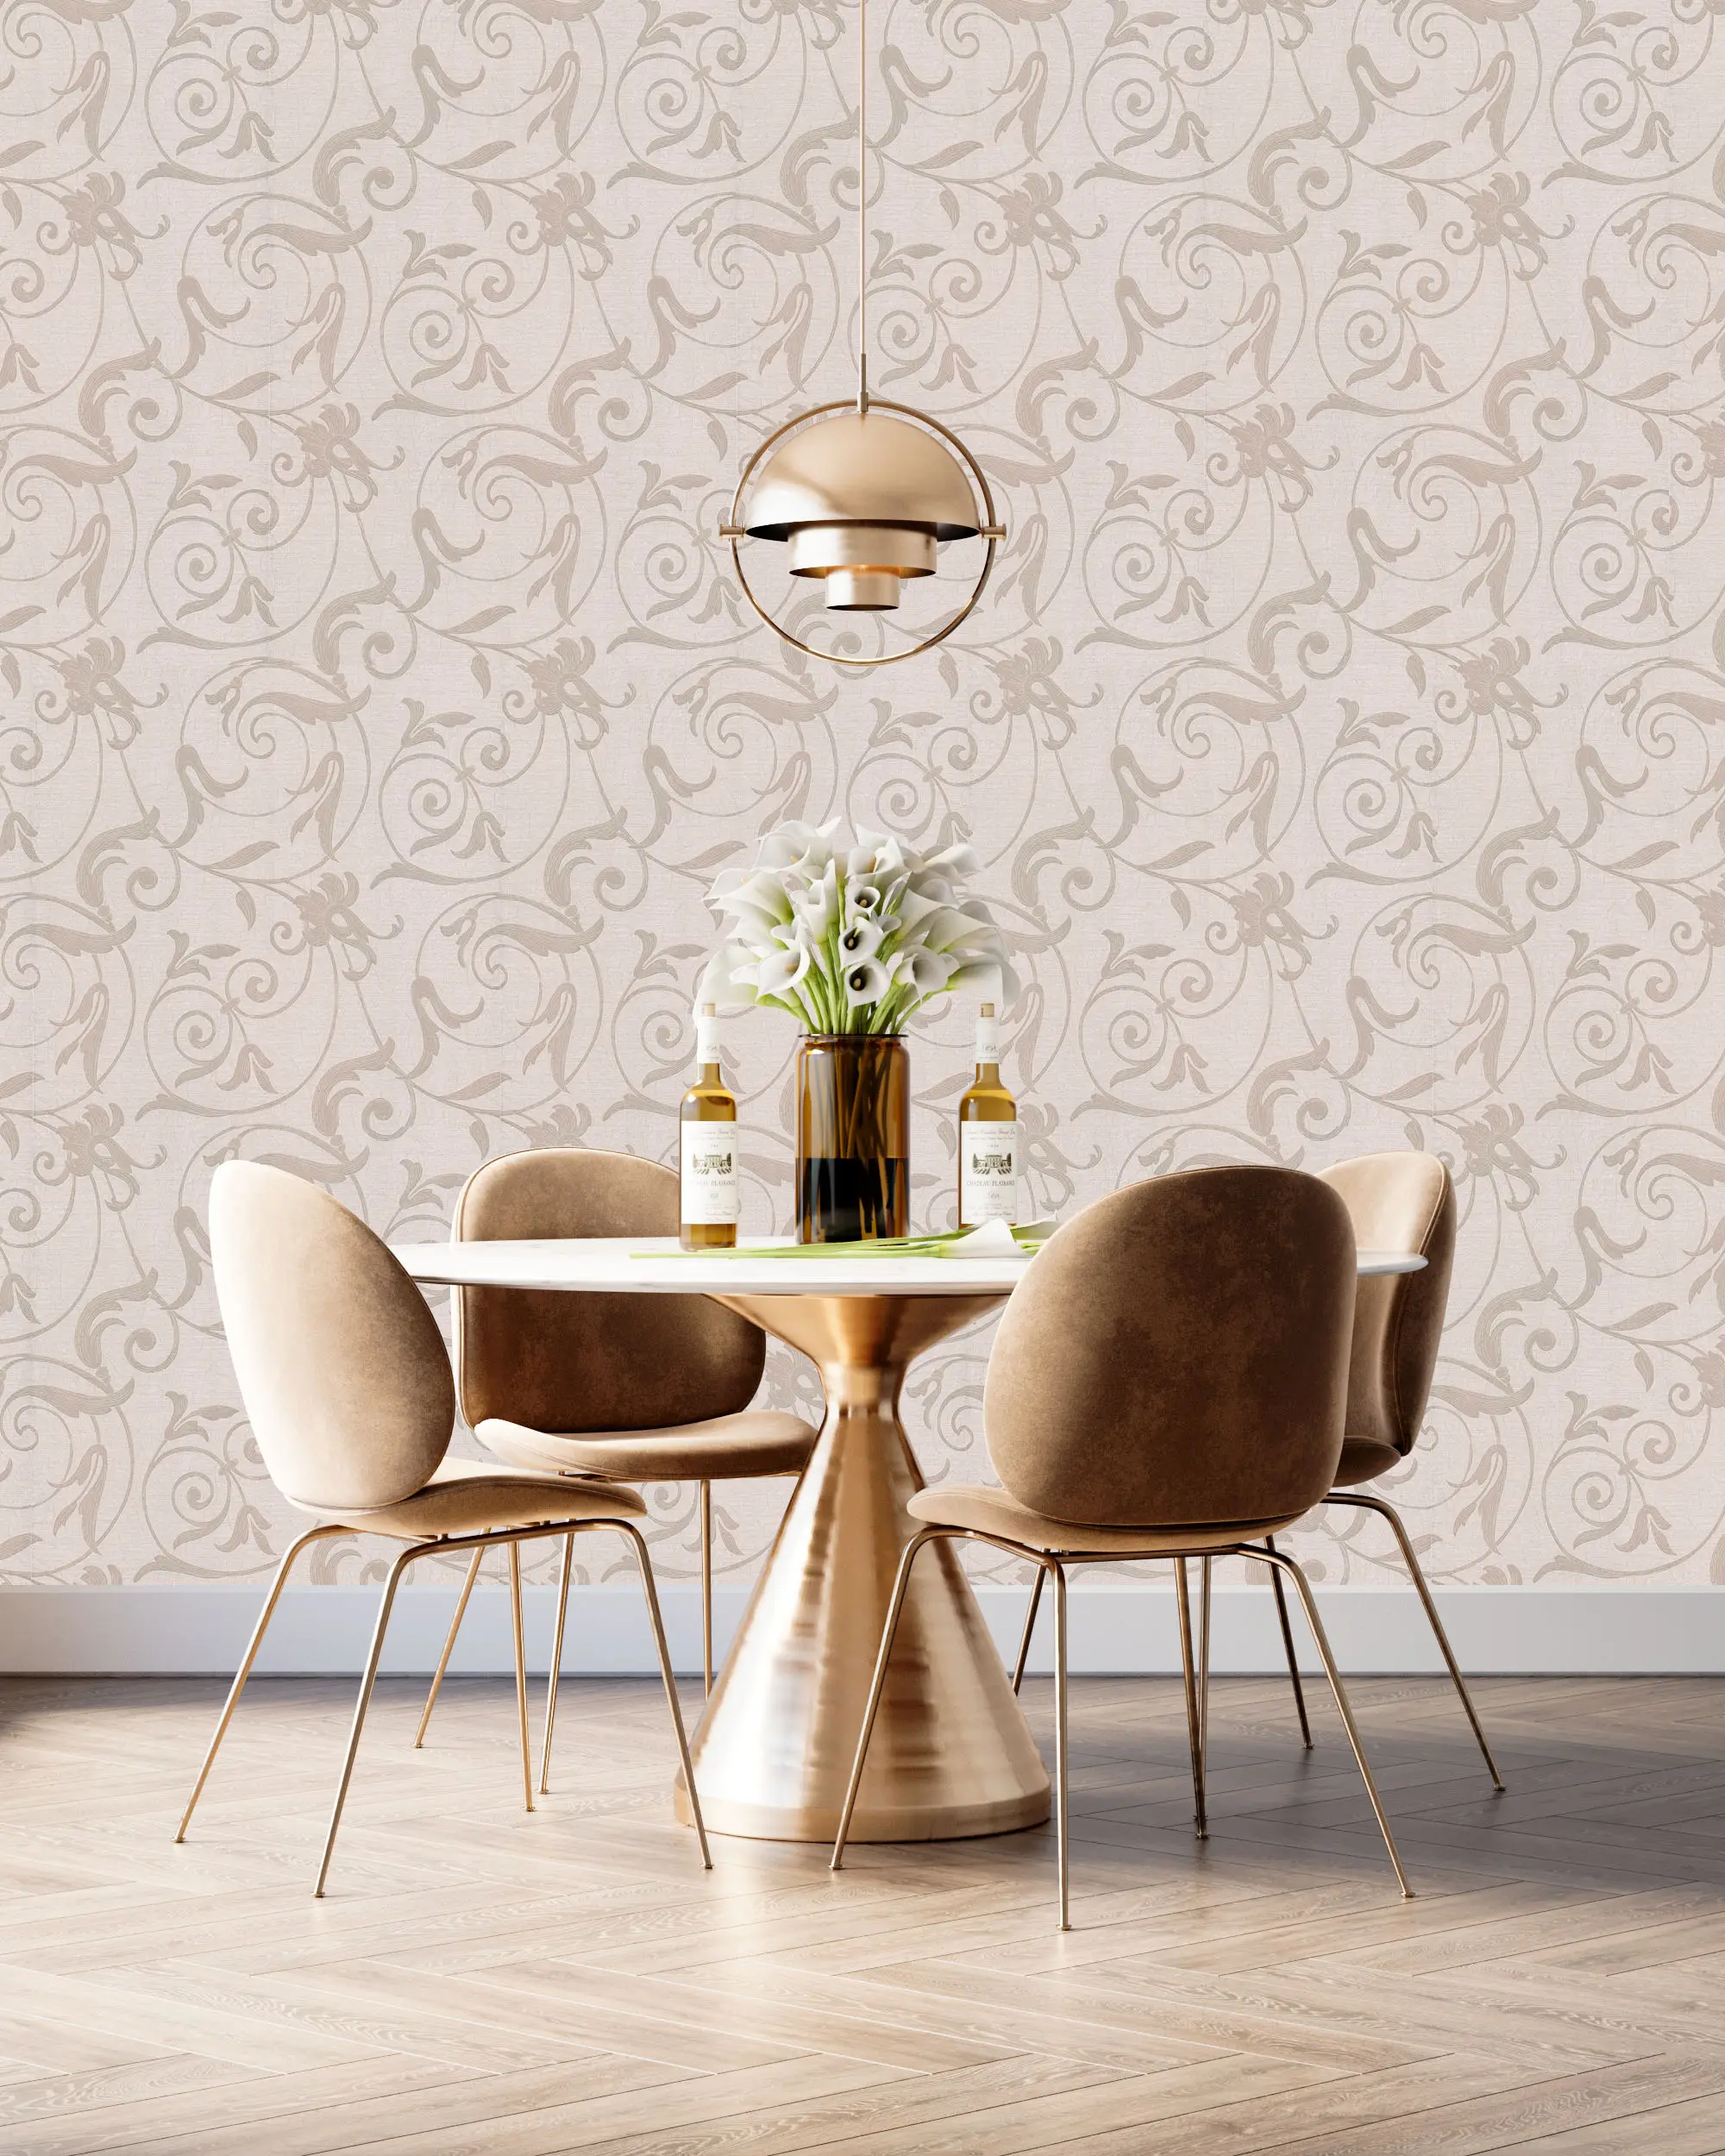 Floral Scrolls Mid-century modern New design living room bedroom flower wallpaper bedroom wallpaper